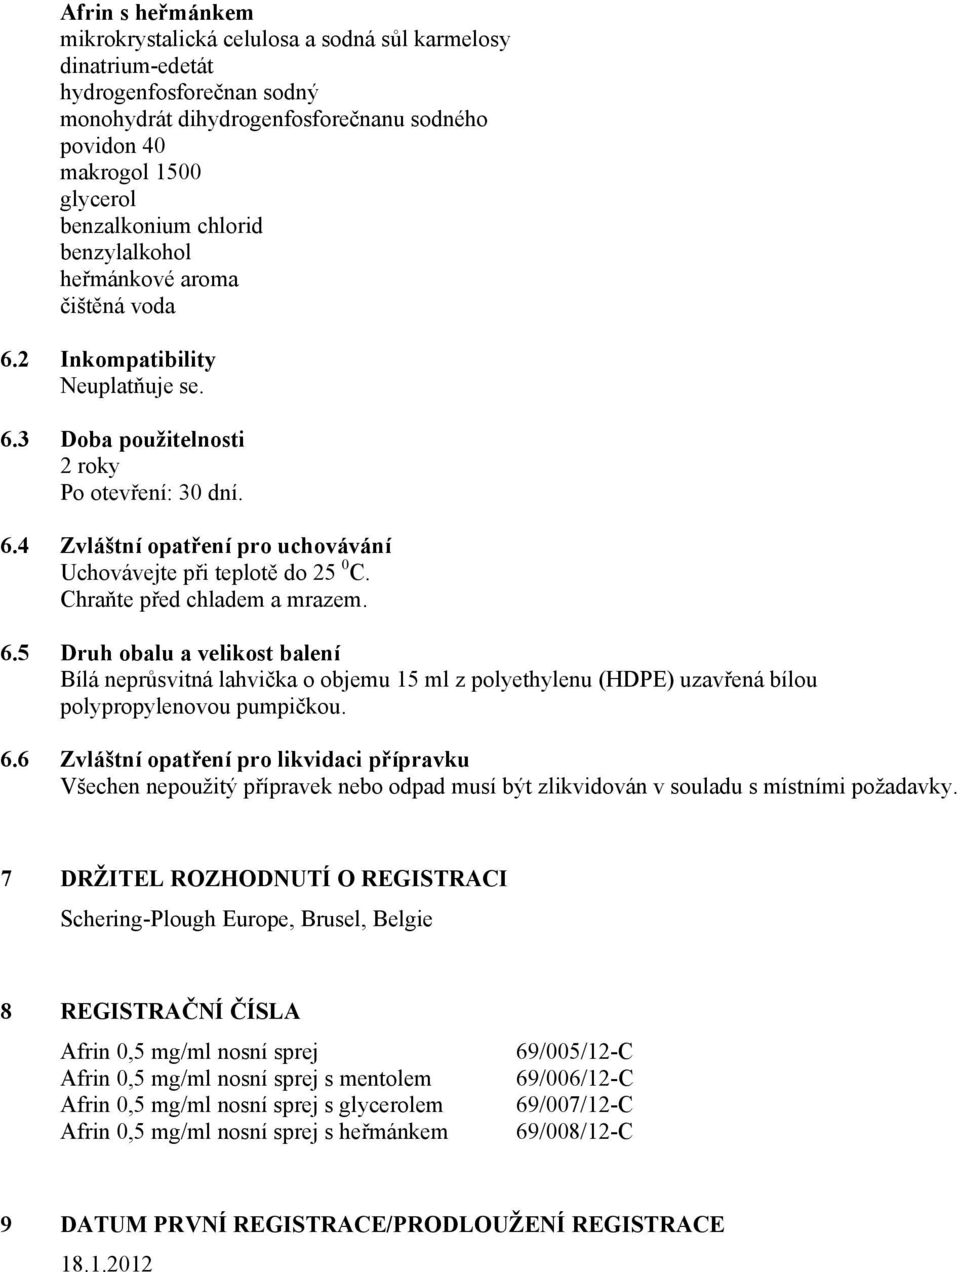 7 DRŽITEL ROZHODNUTÍ O REGISTRACI Schering-Plough Еurope, Brusel, Belgie 8 REGISTRAČNÍ ČÍSLA Afrin 0,5 mg/ml nosní sprej Afrin 0,5 mg/ml nosní sprej s mentolem Afrin 0,5 mg/ml nosní sprej s